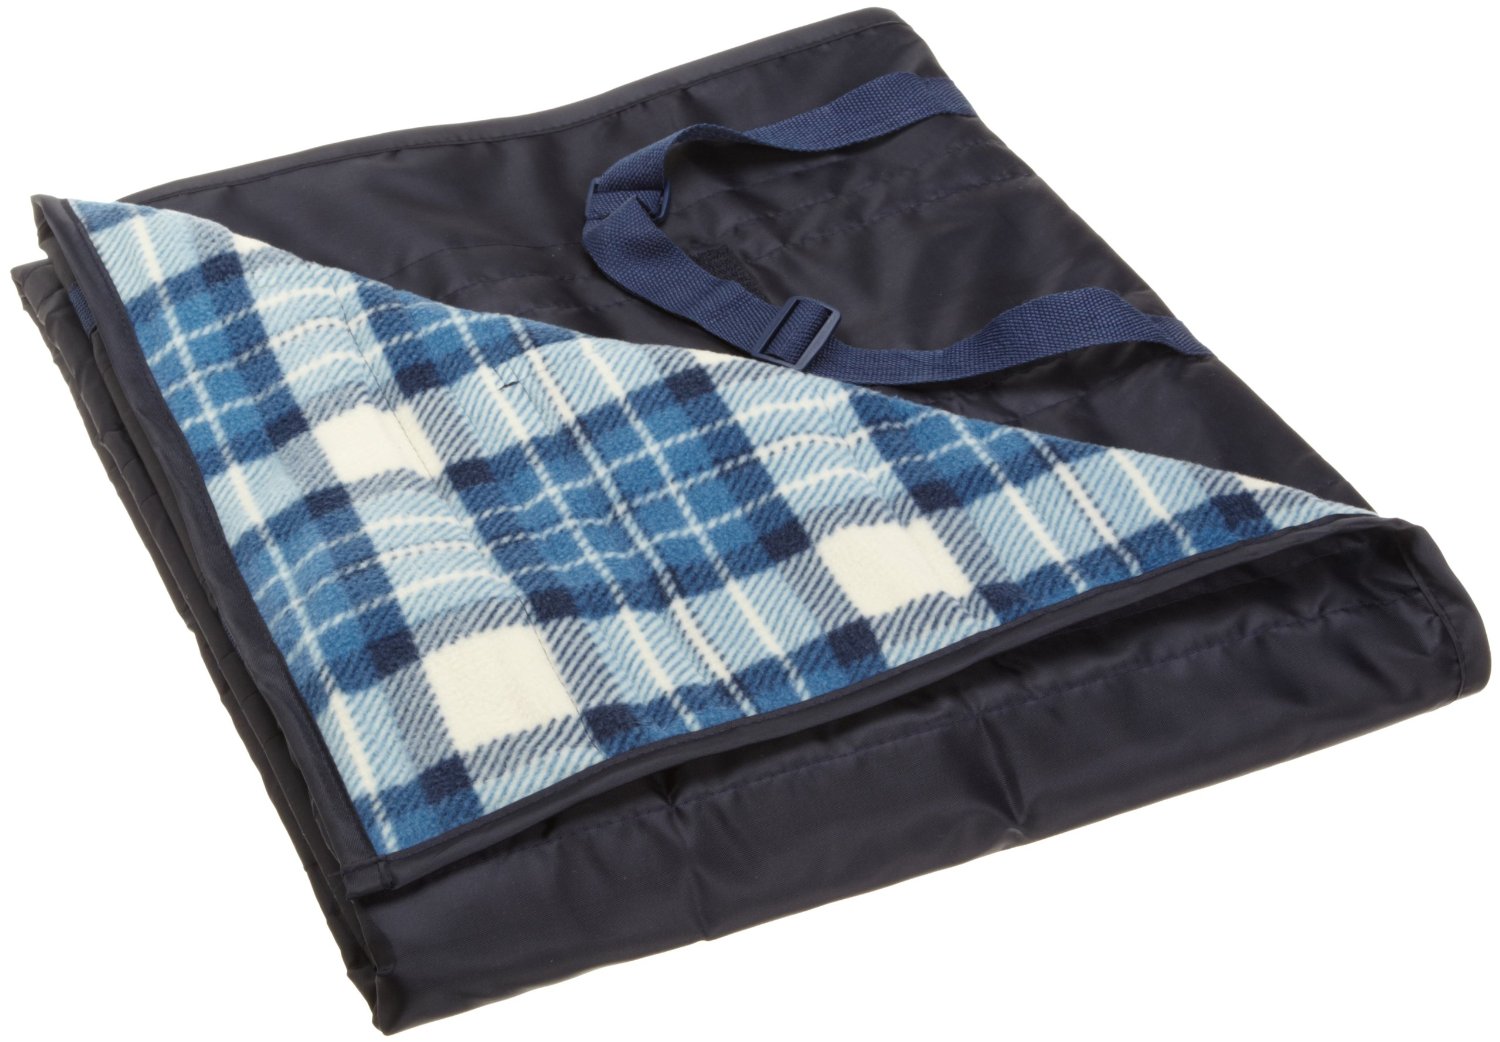 5 Best Outdoor Blanket - Complete your outdoor experience - Tool Box